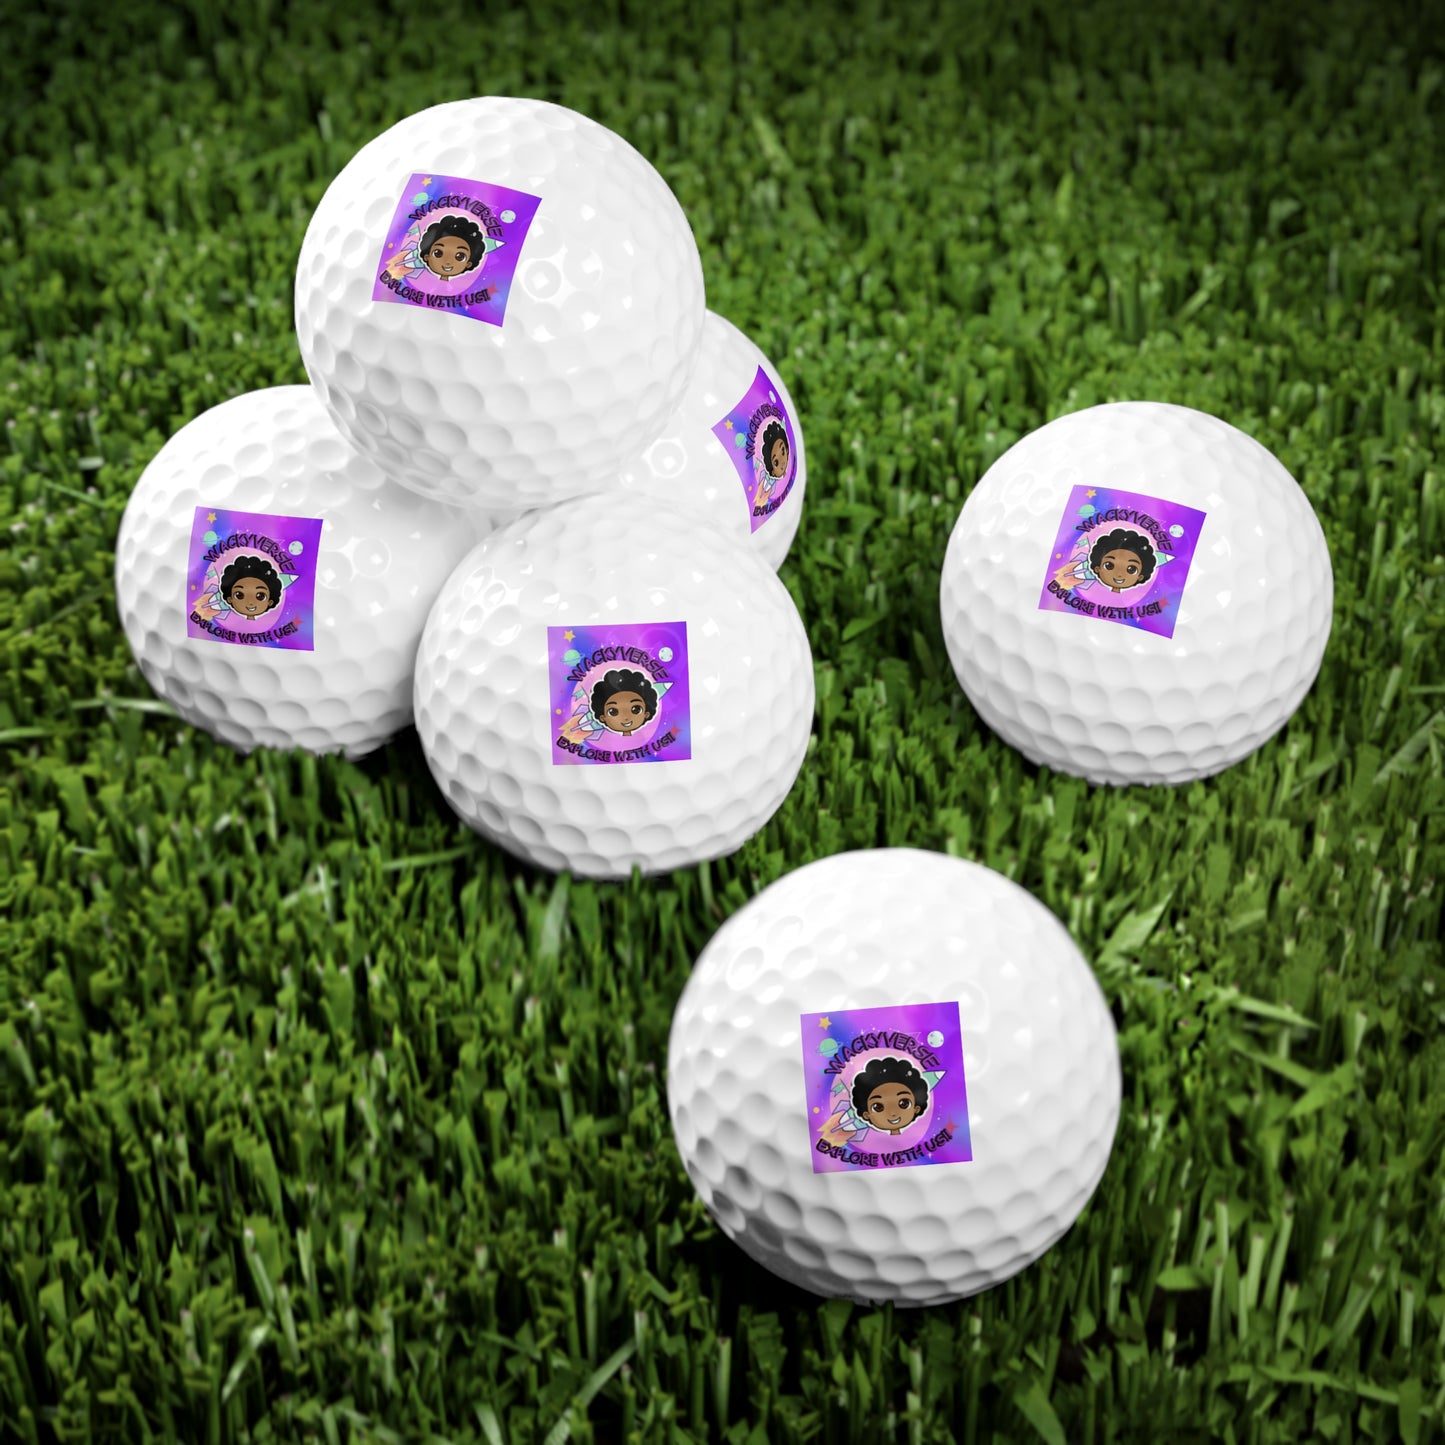 Wacky Golf Balls, 6pcs